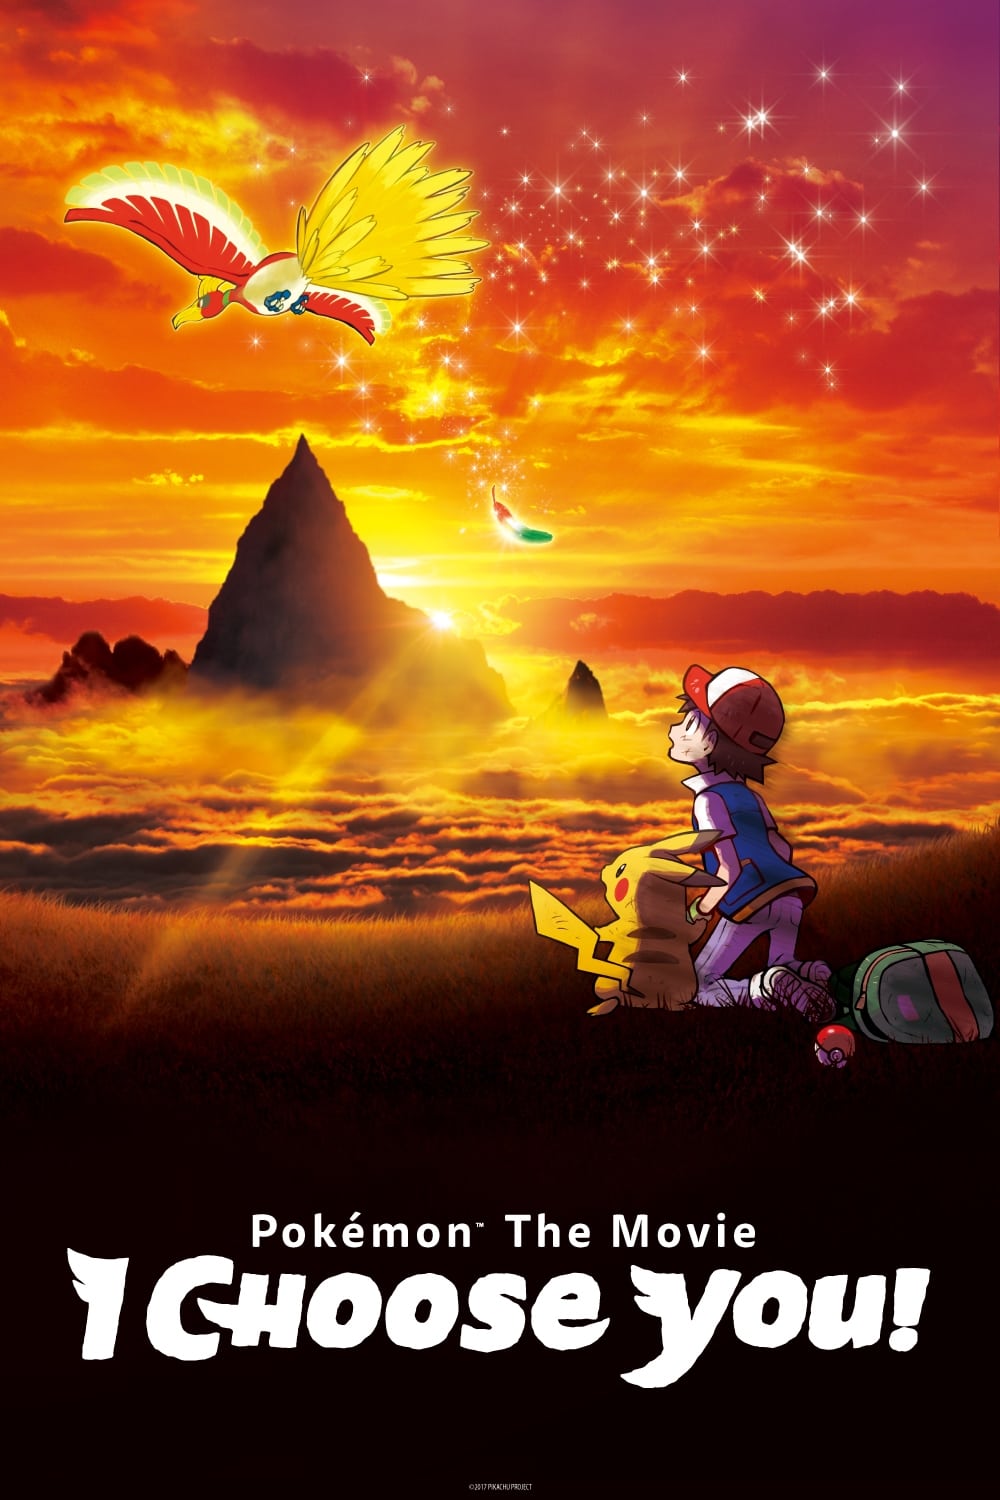 Pokémon The Movie: I Choose You! Picture